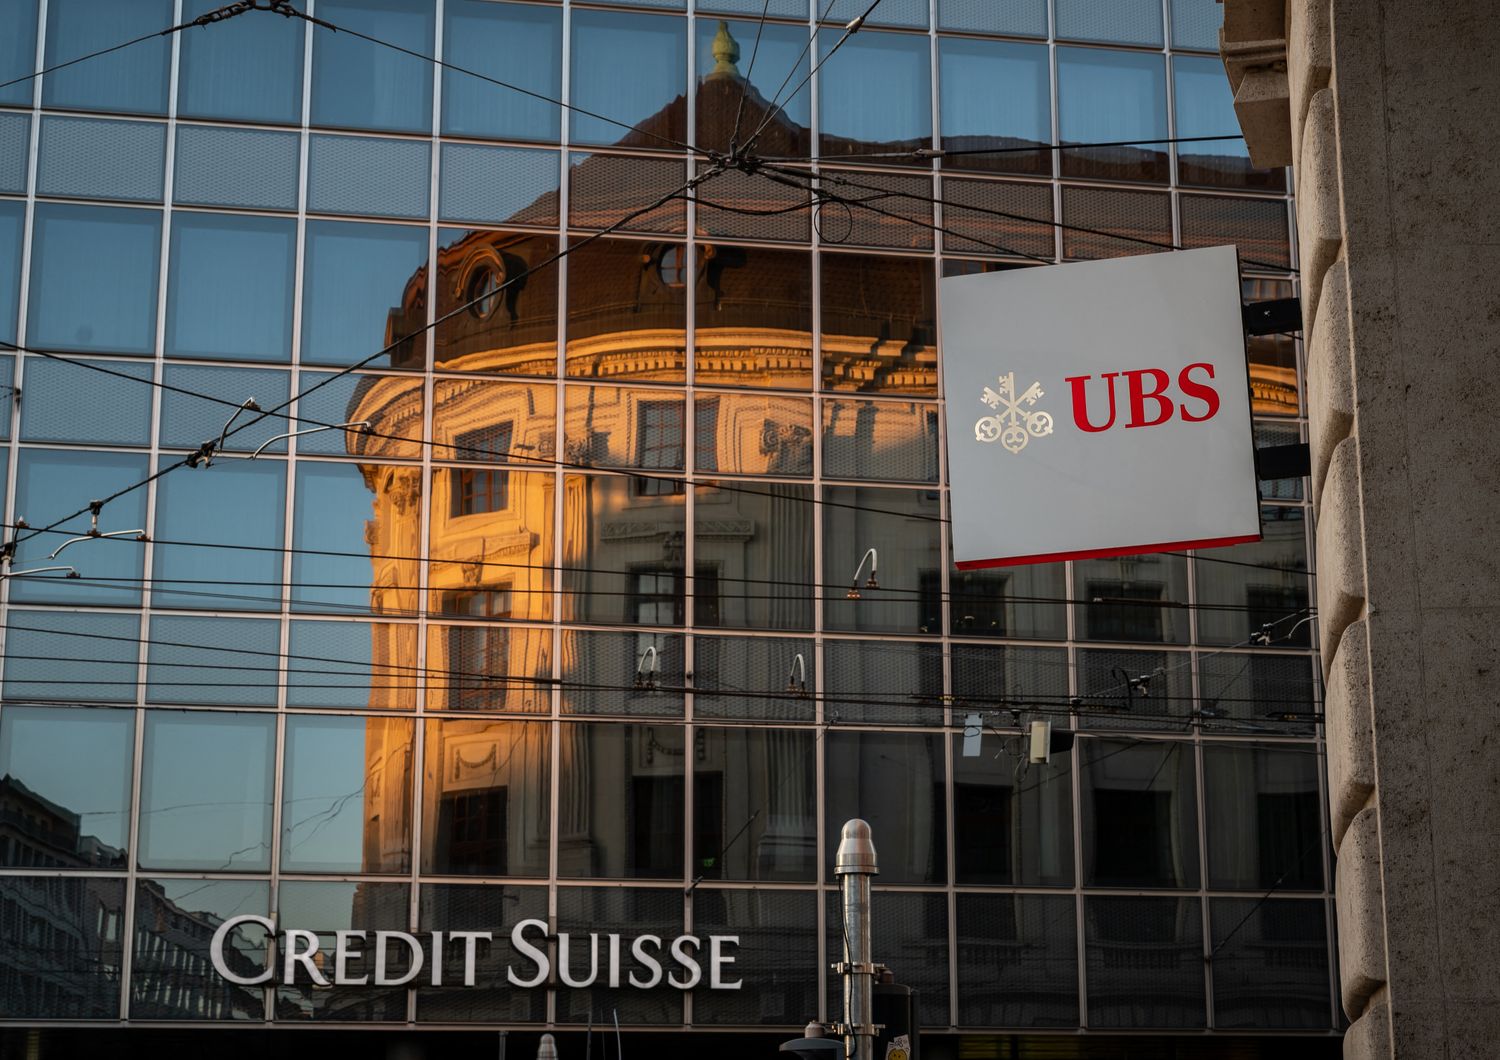 Credit Suisse e Usb